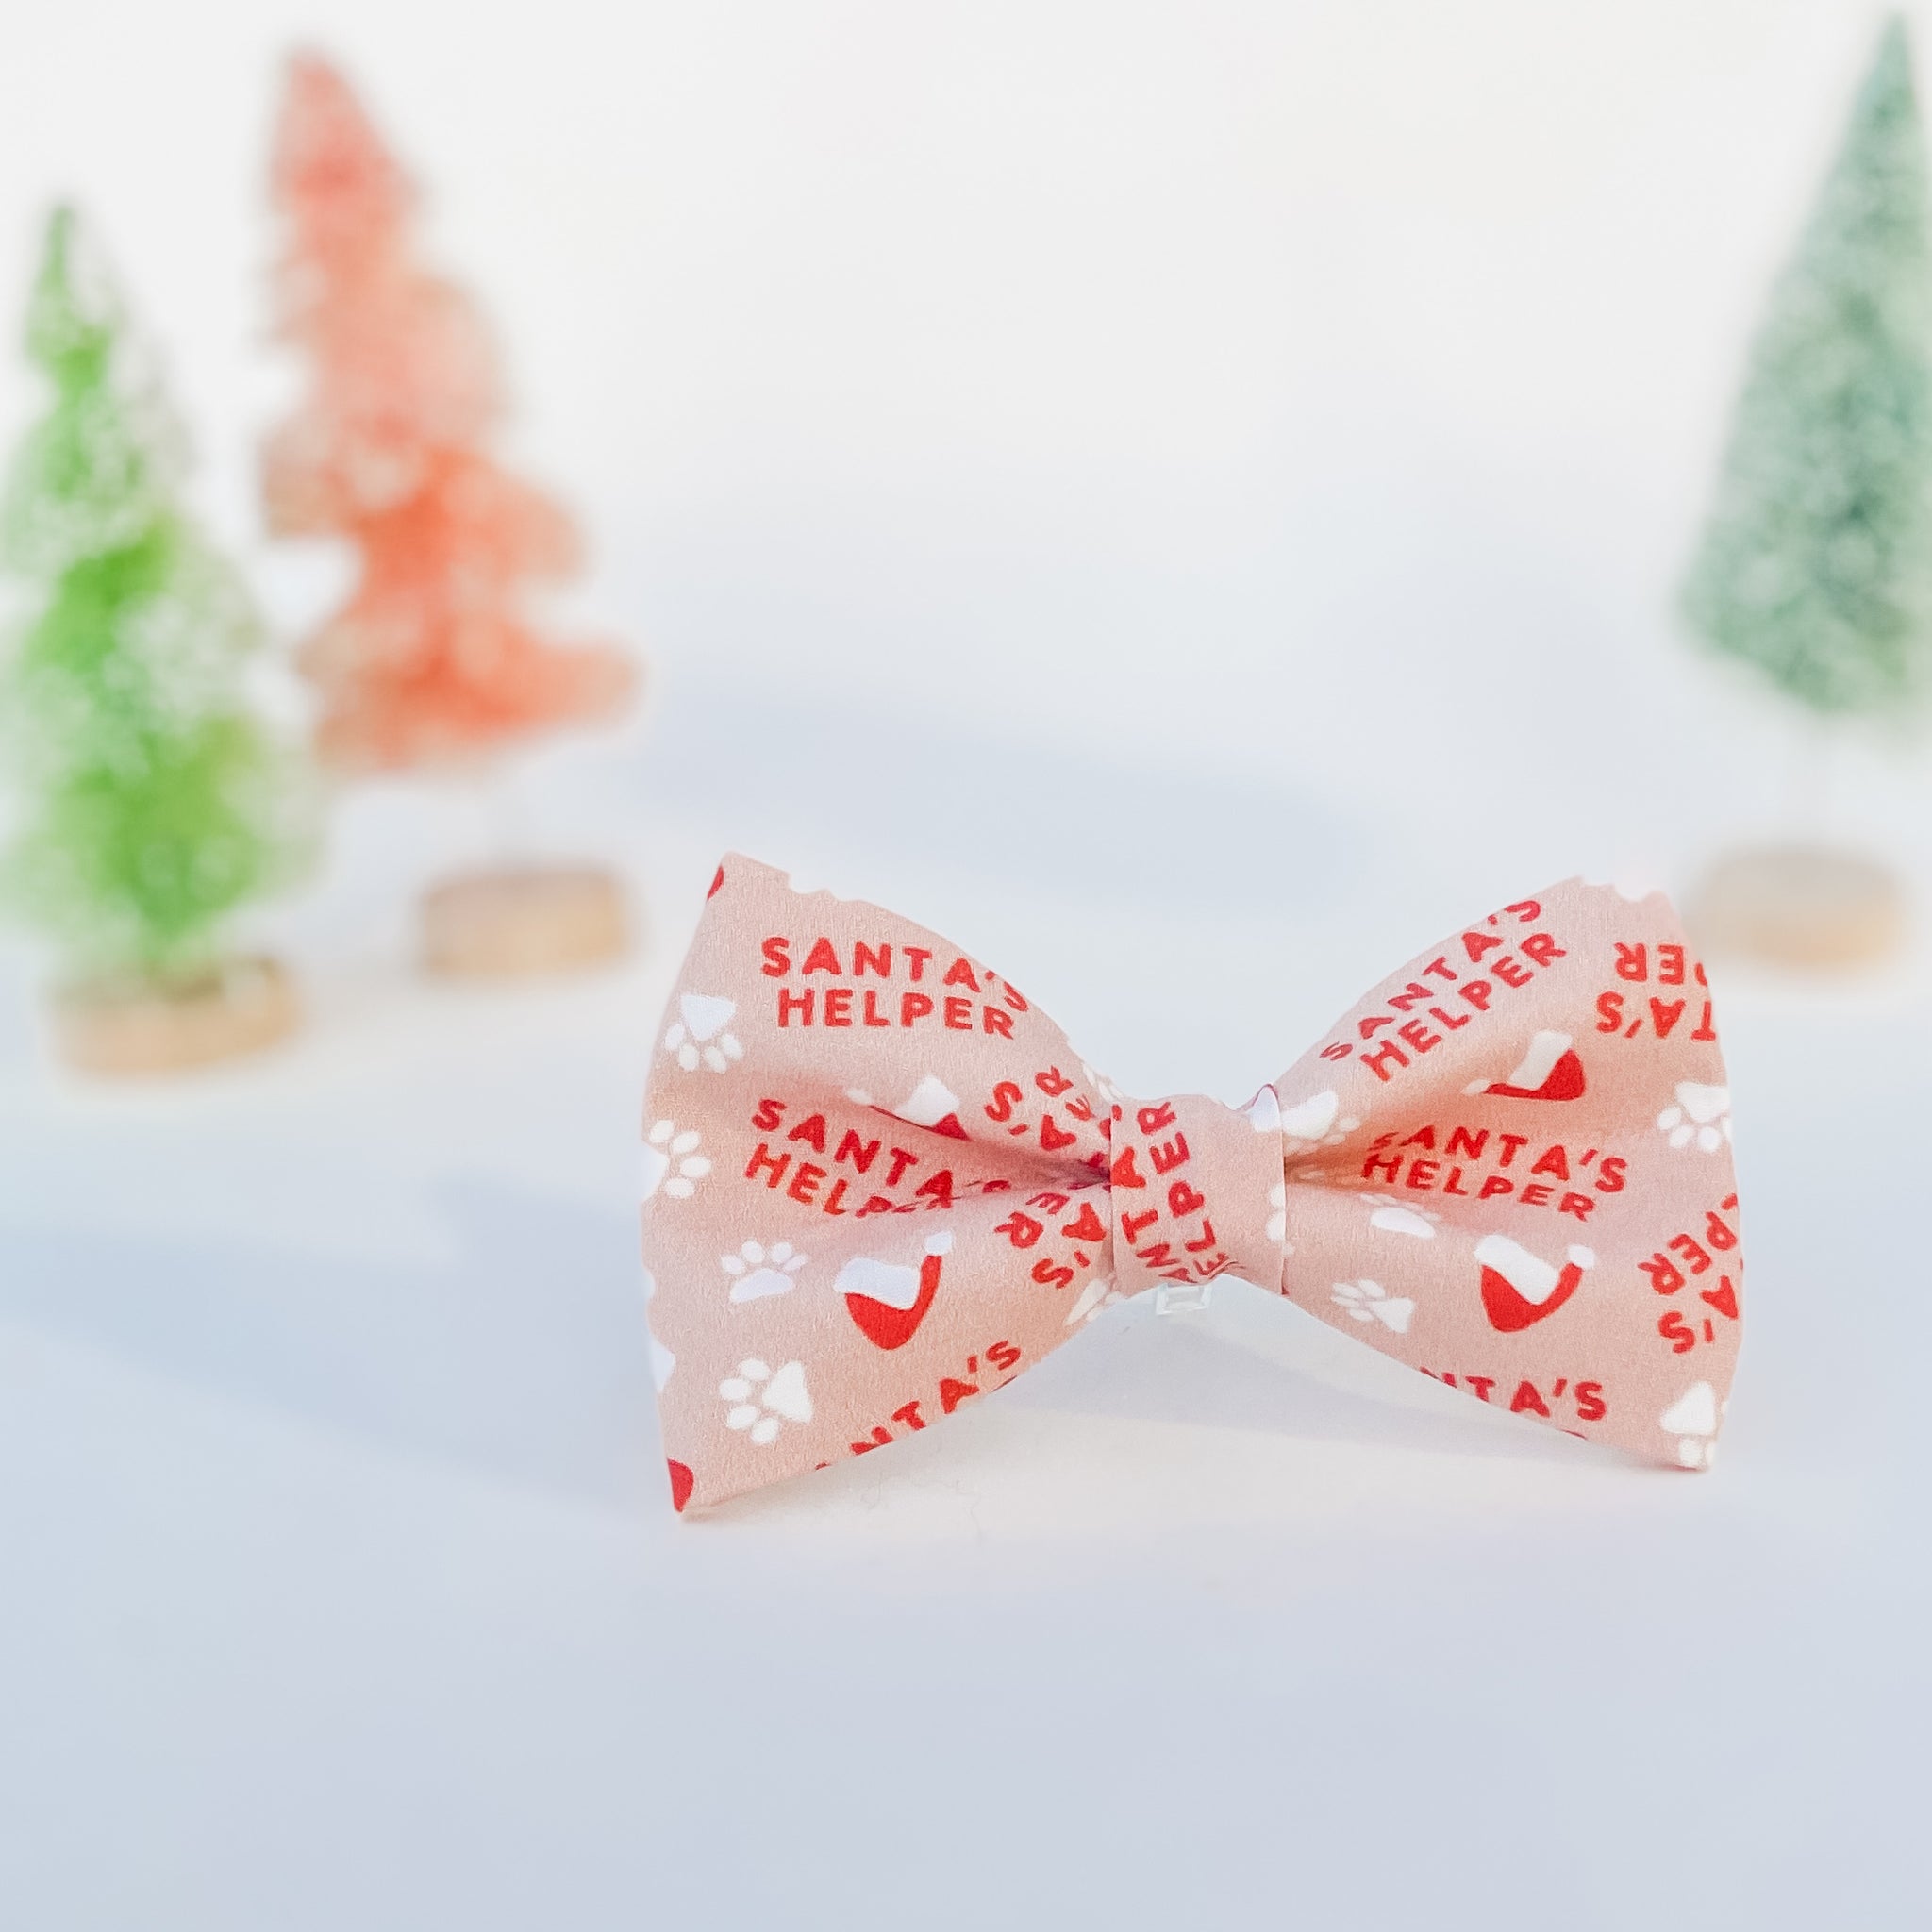 Santa’s Helper pink Christmas dog bow tie pet accessory